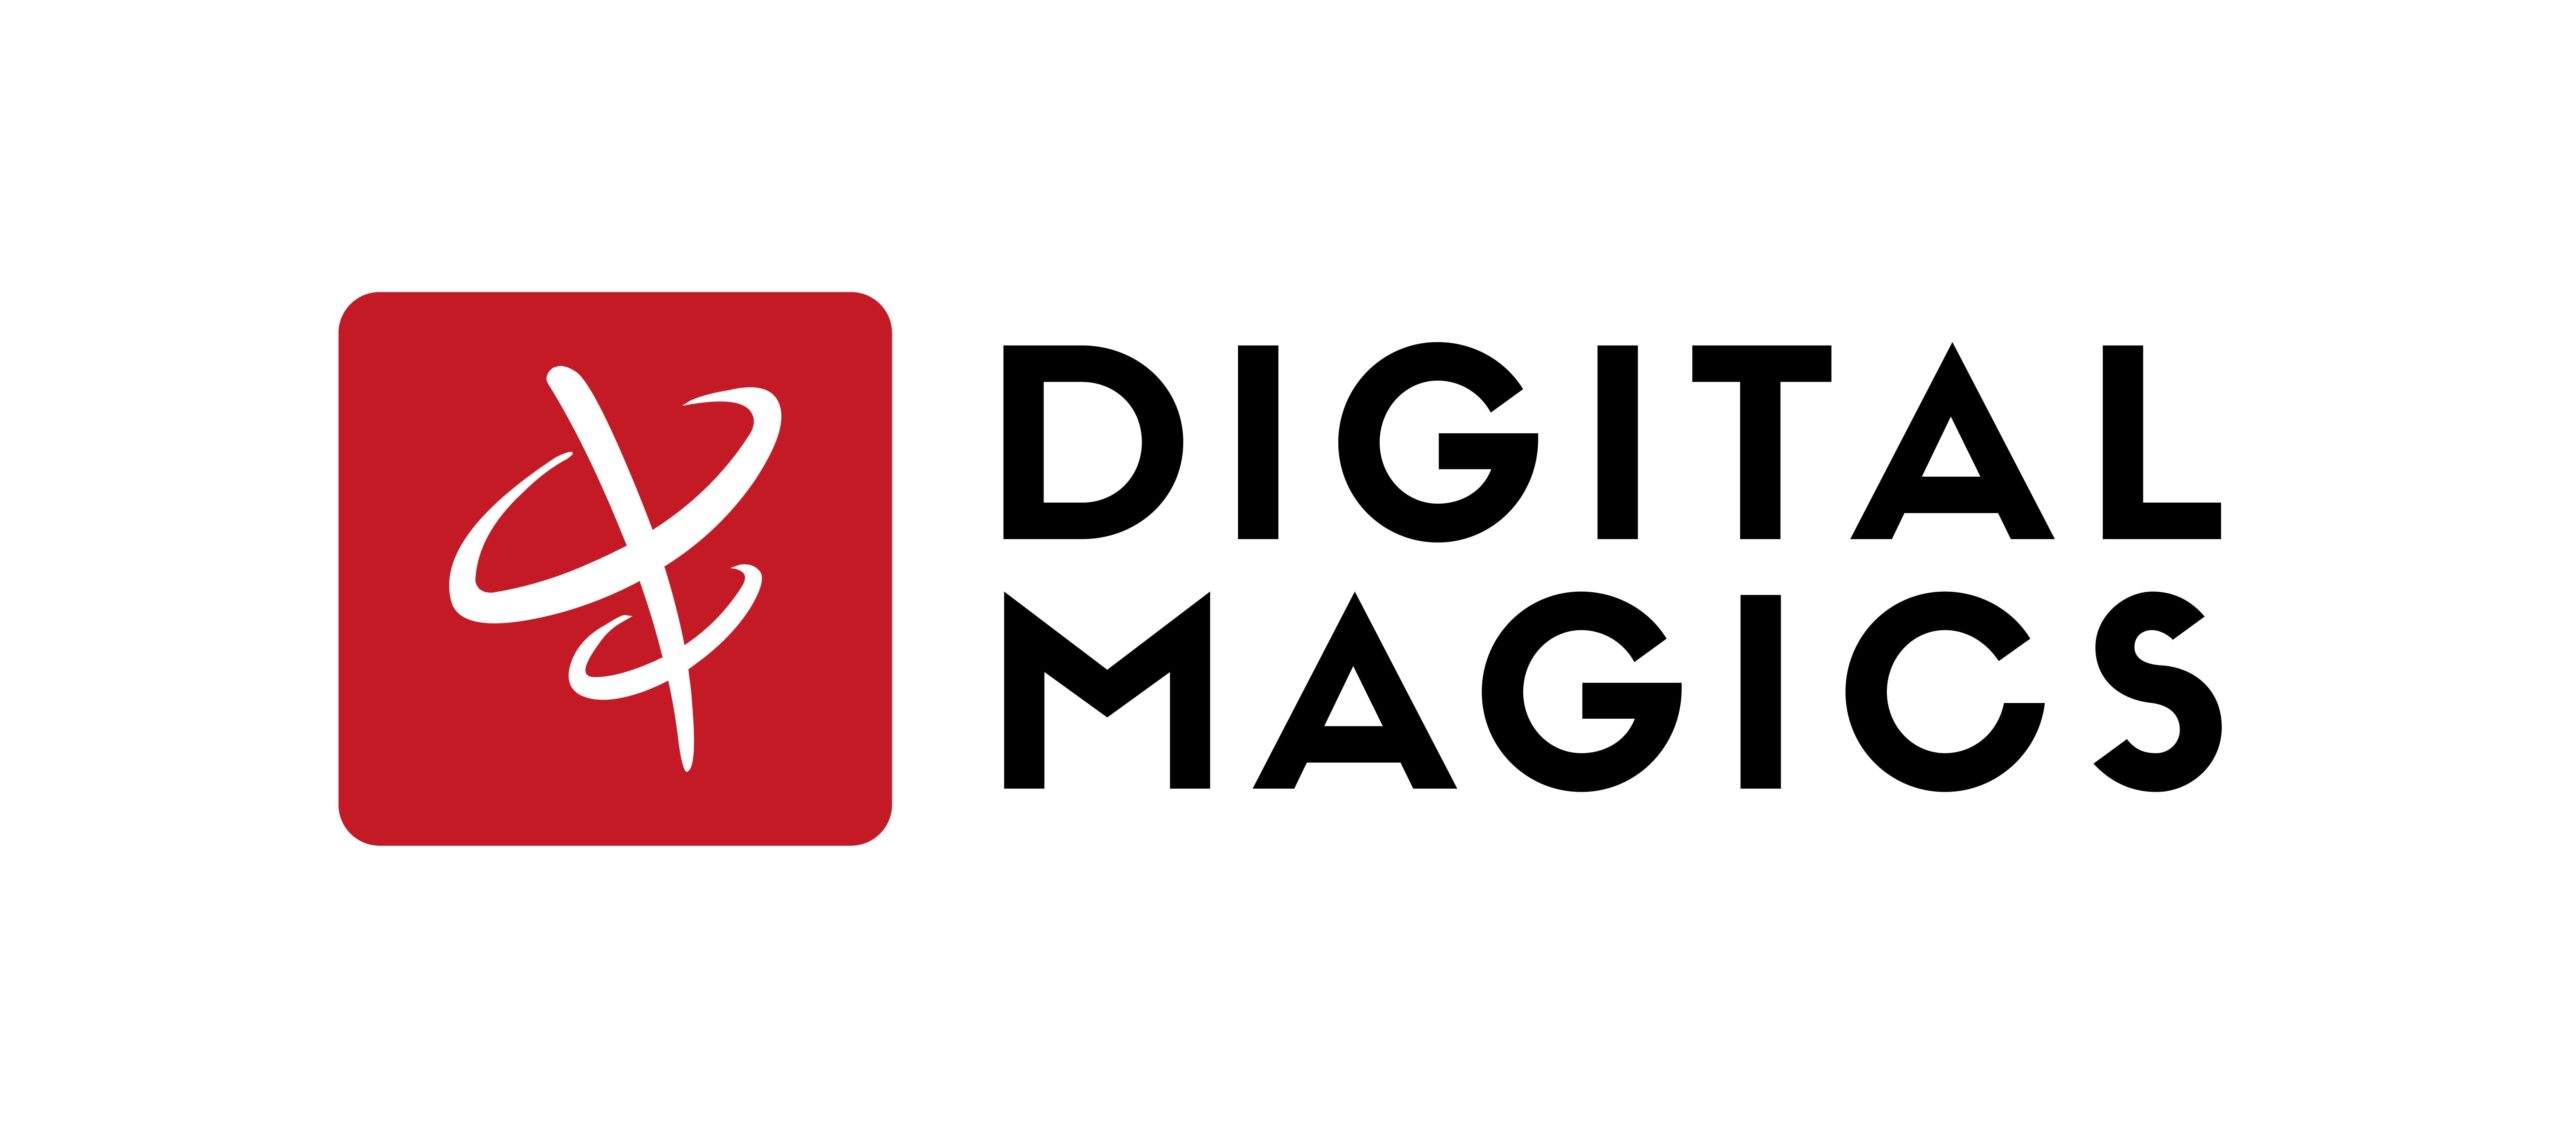 Magie digitali